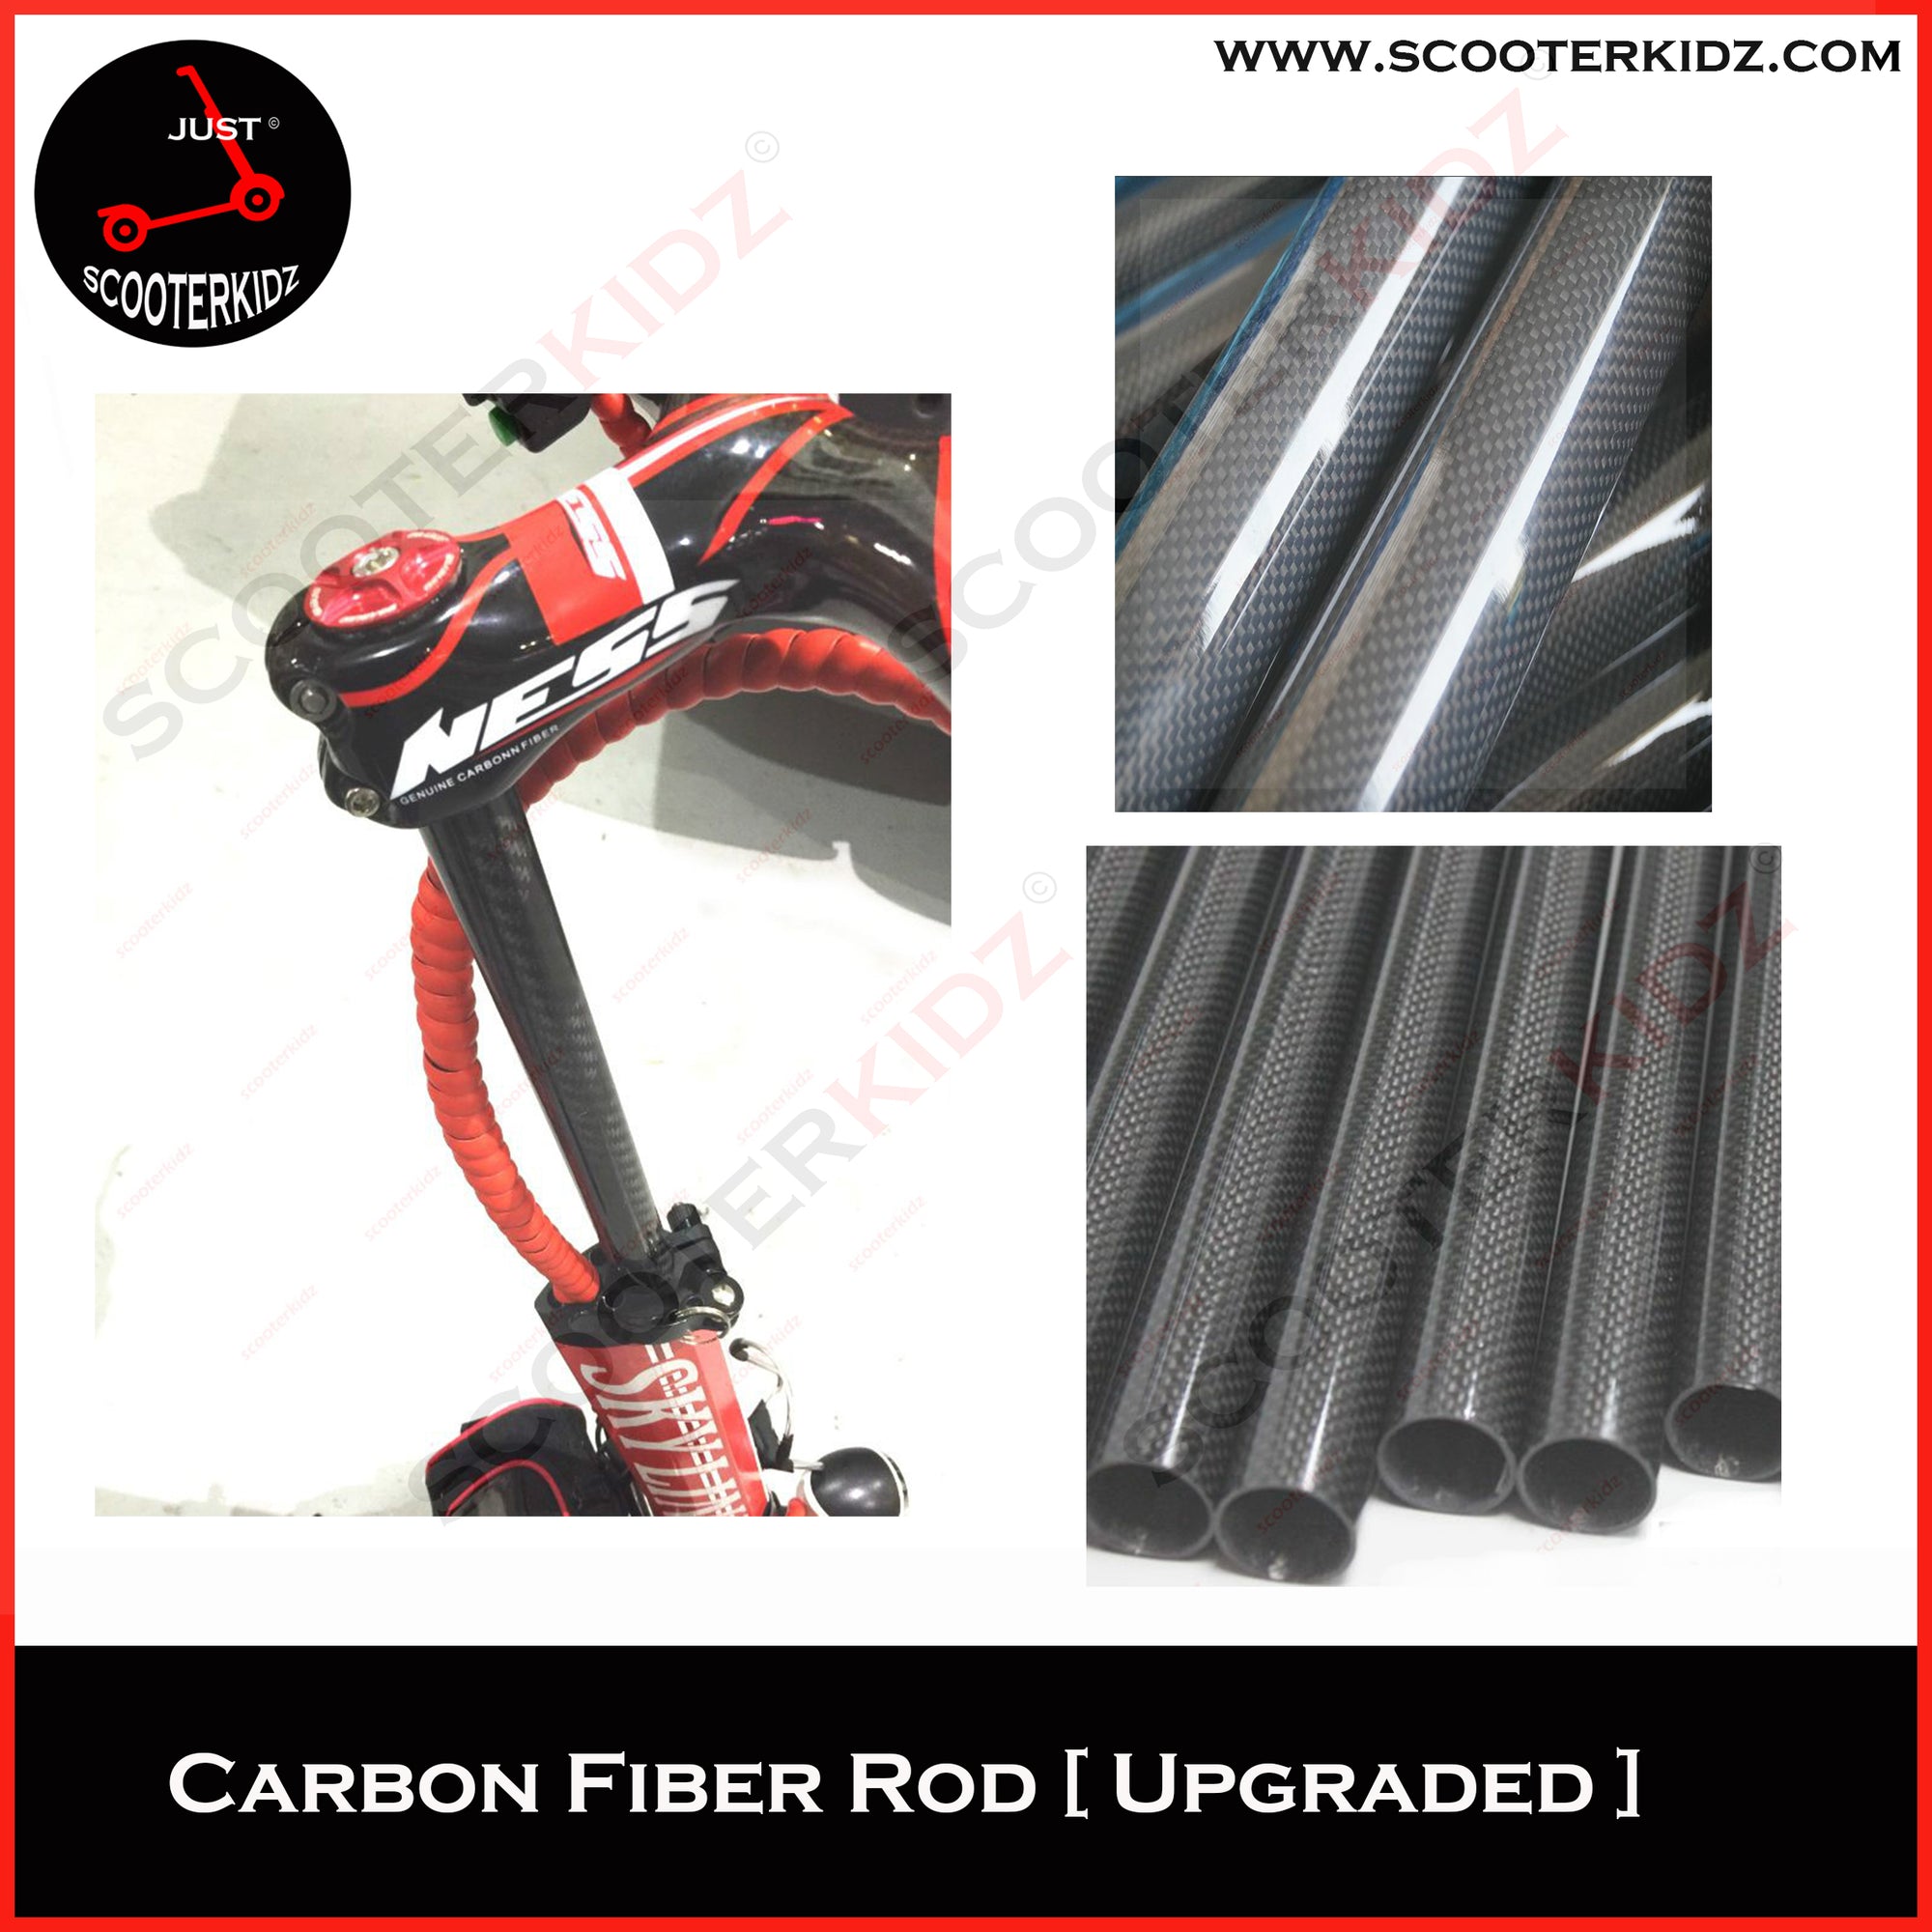 Scooterkidz Carbon Fiber Steering Rod (100% Carbon Fiber, Tested) Upgraded thicker